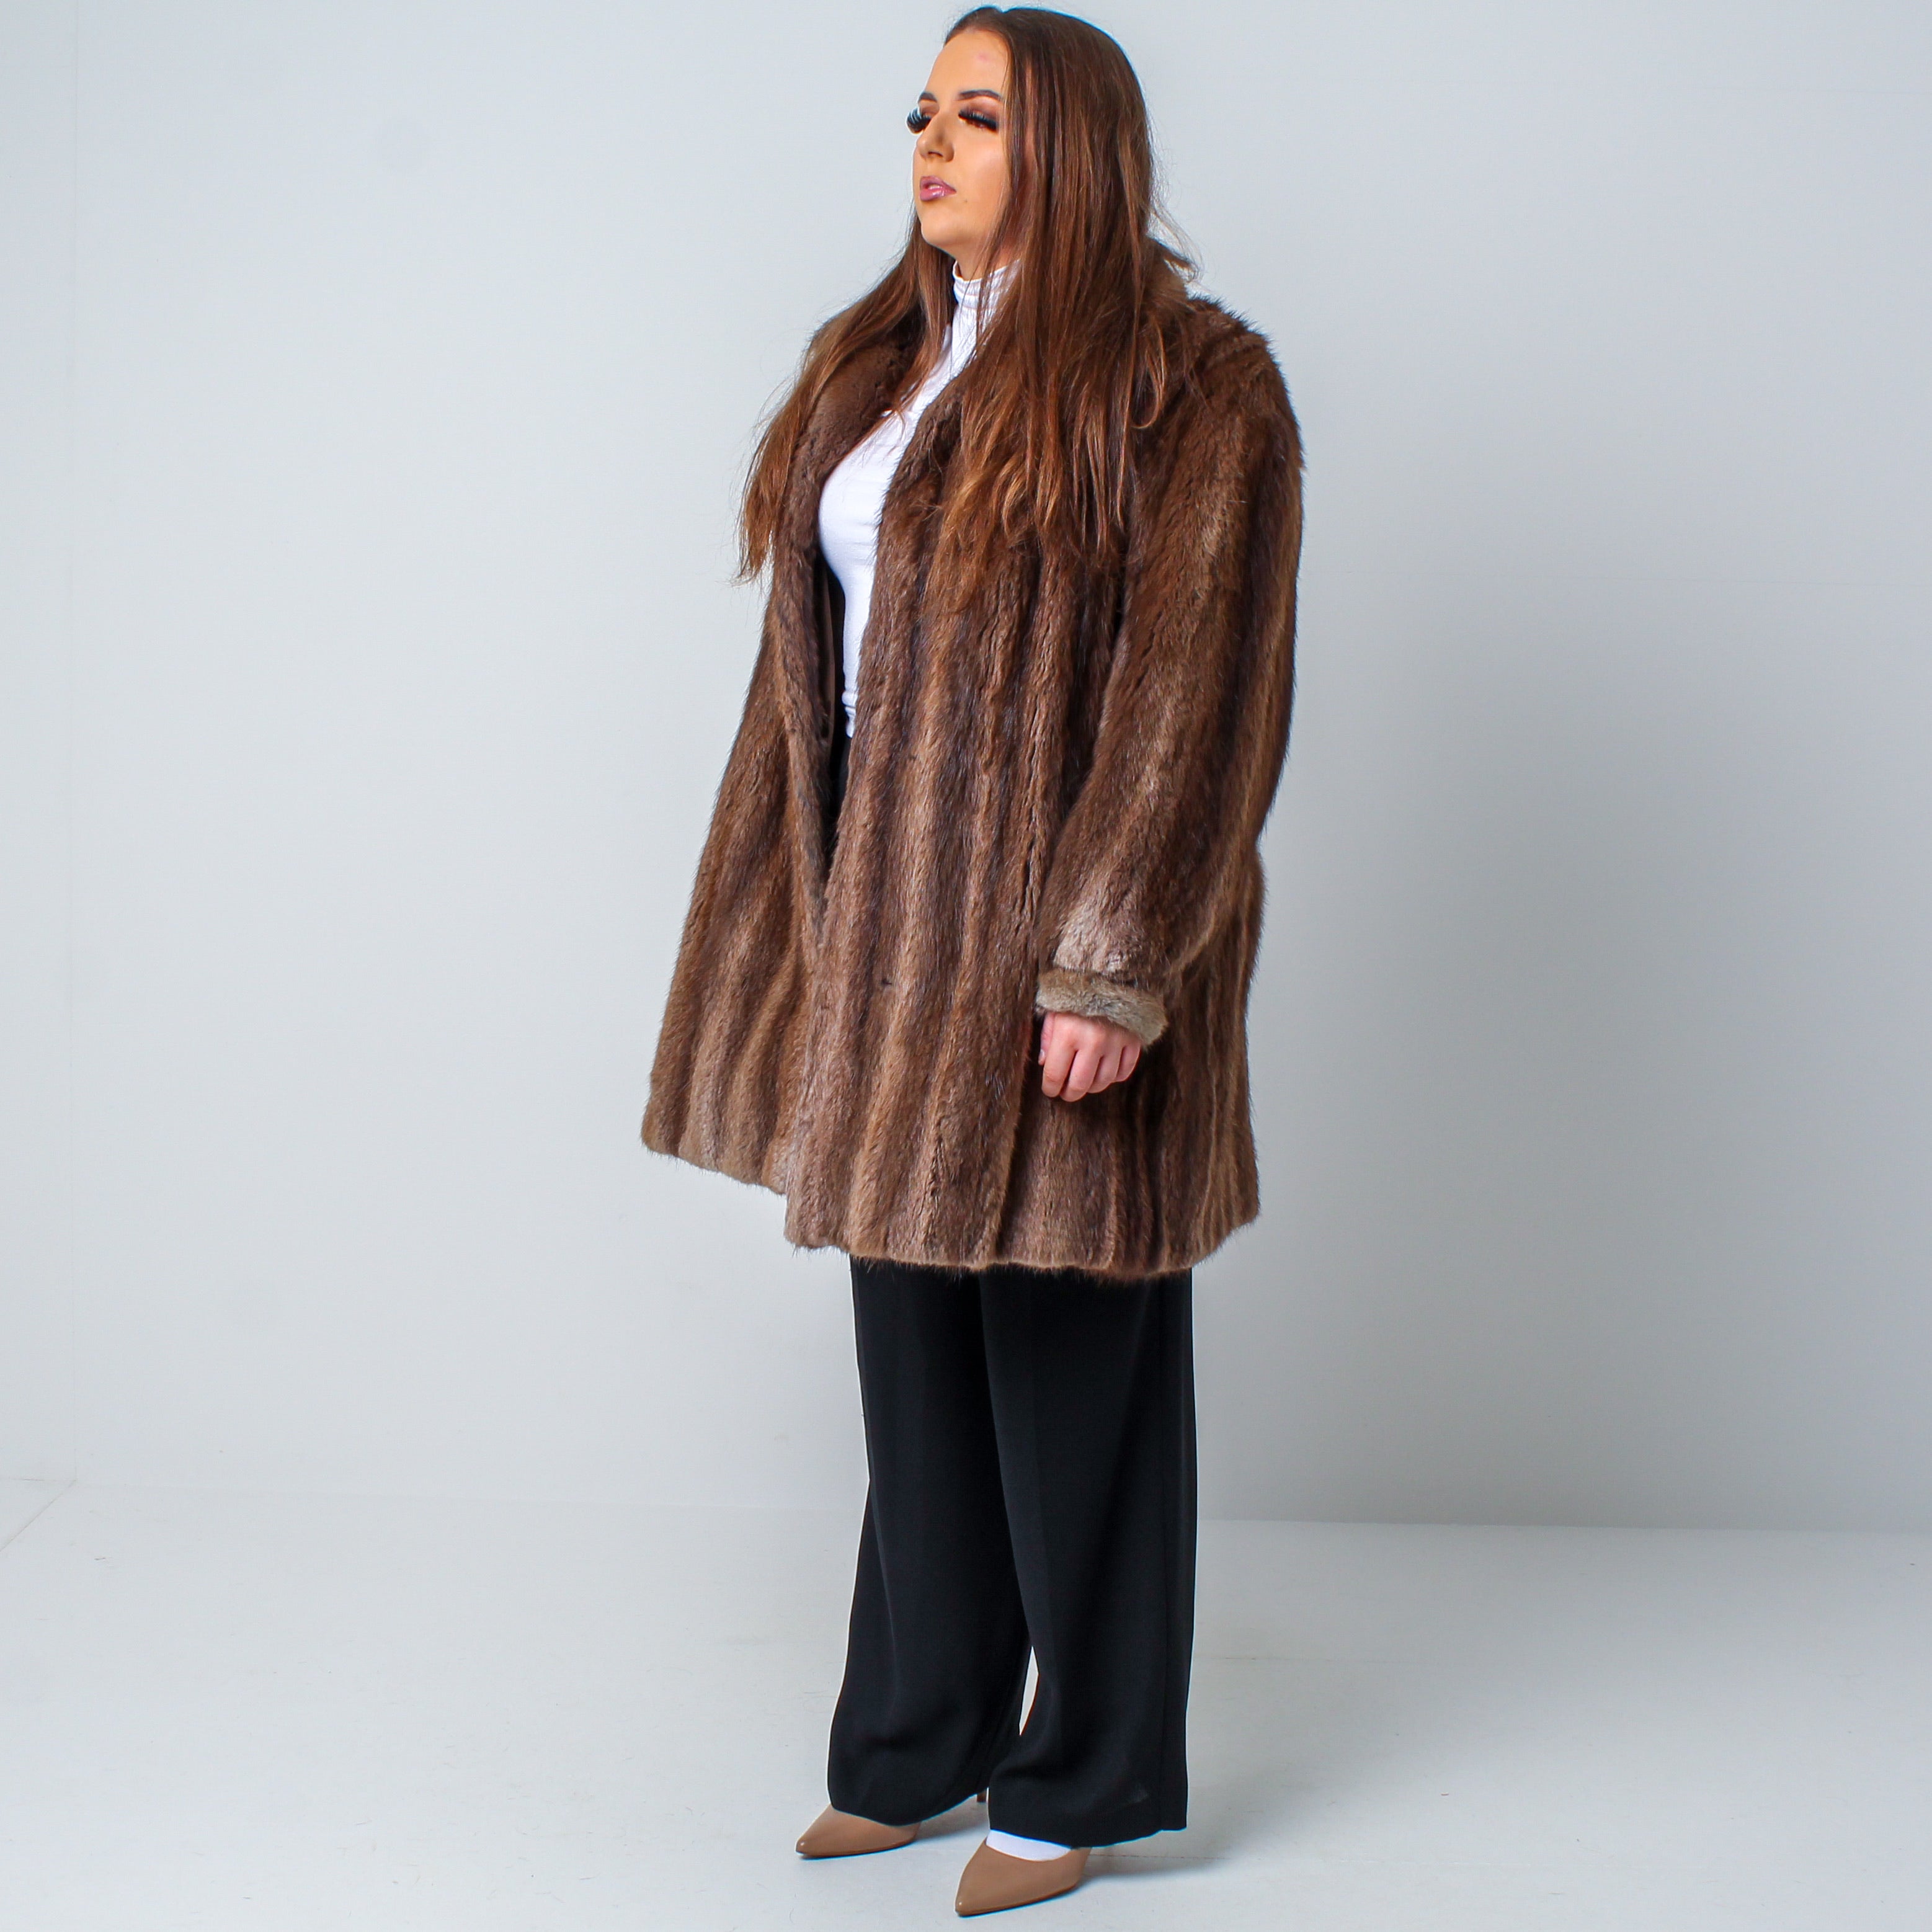 Women’s Vintage Real Mink Fur Coat Size: Large/XL Women’s UK 12-16